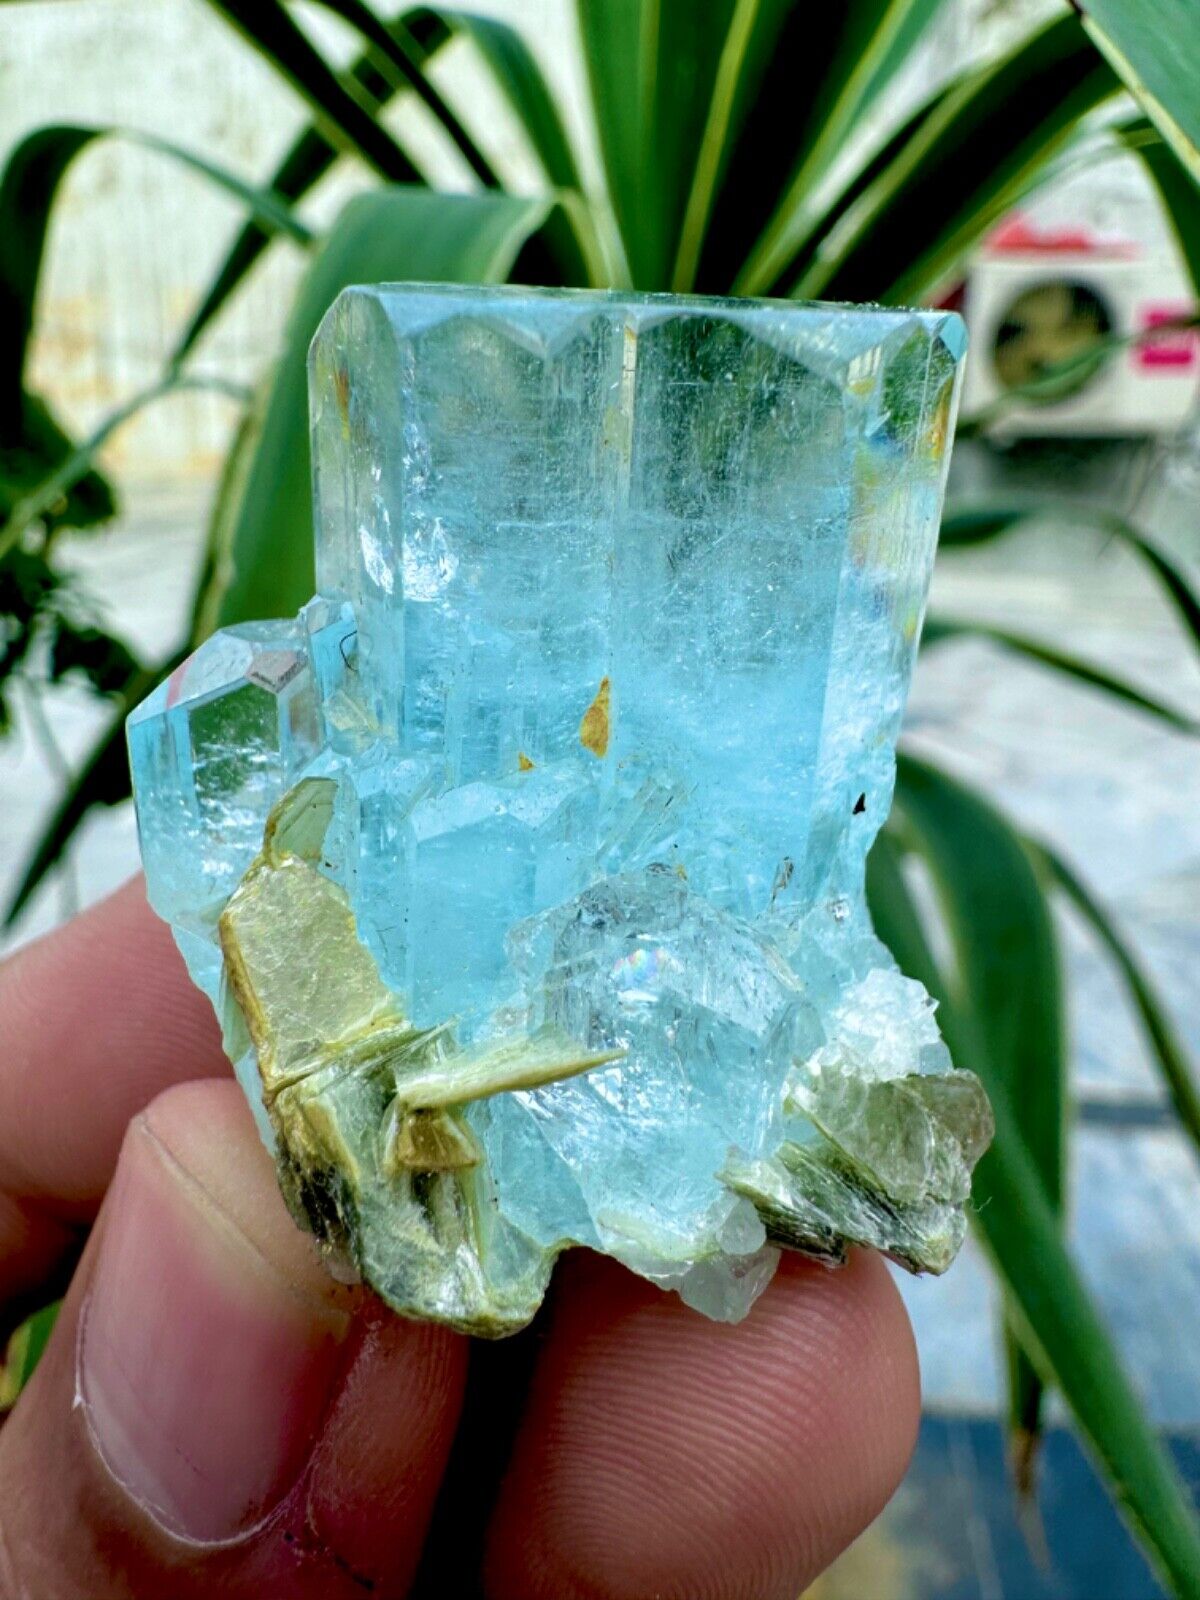 185 Carat Transparent Blue Aquamarine Crystal With Muscovite @ Mineral Specimens